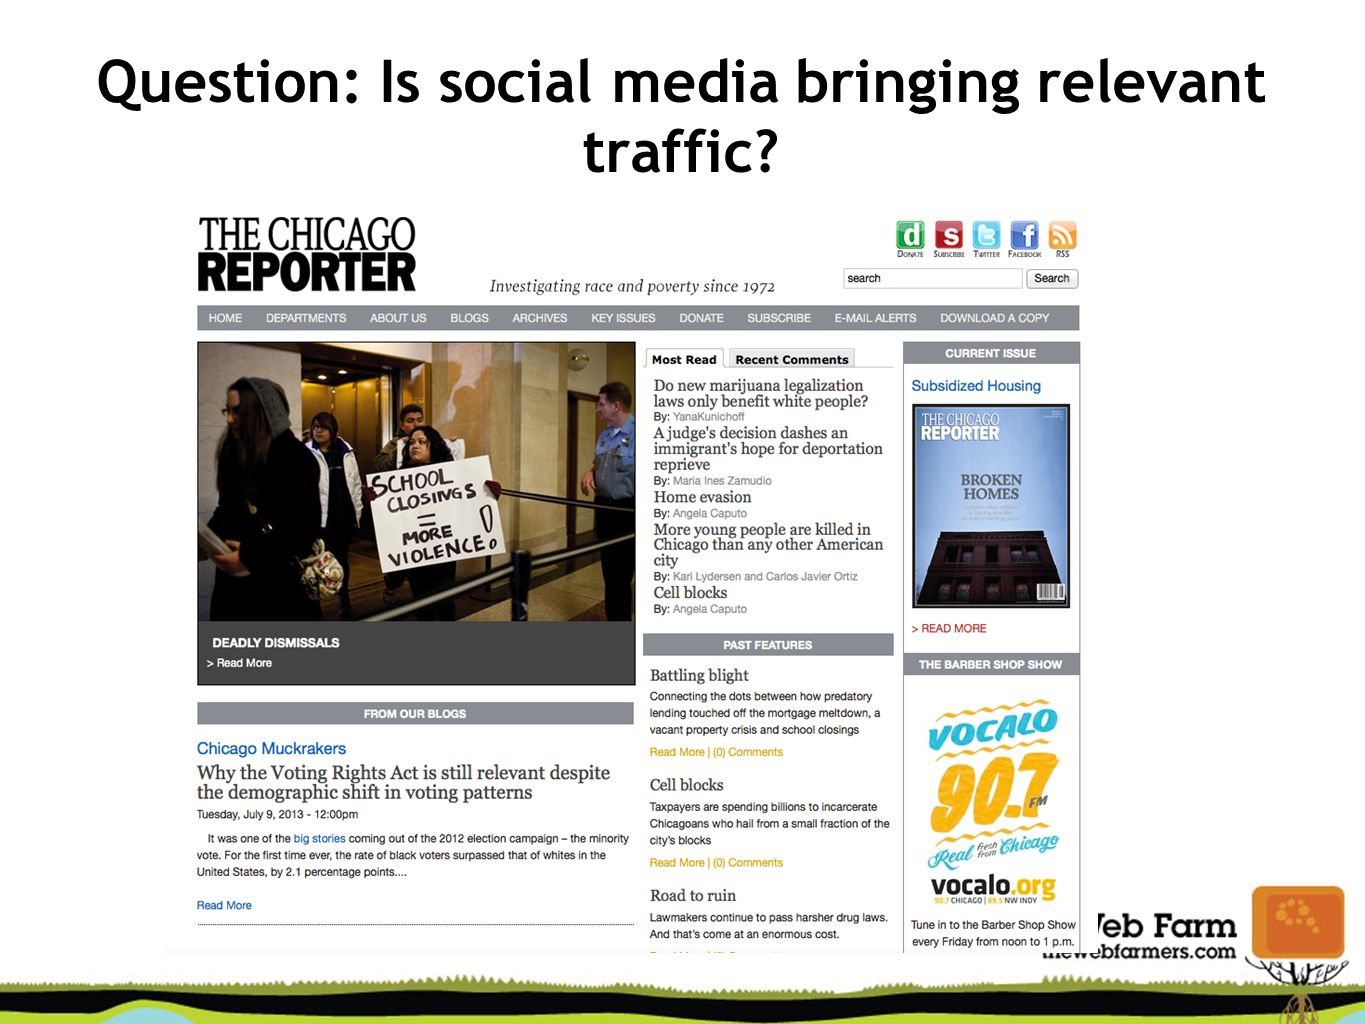 Question: Is social media bringing relevant traffic